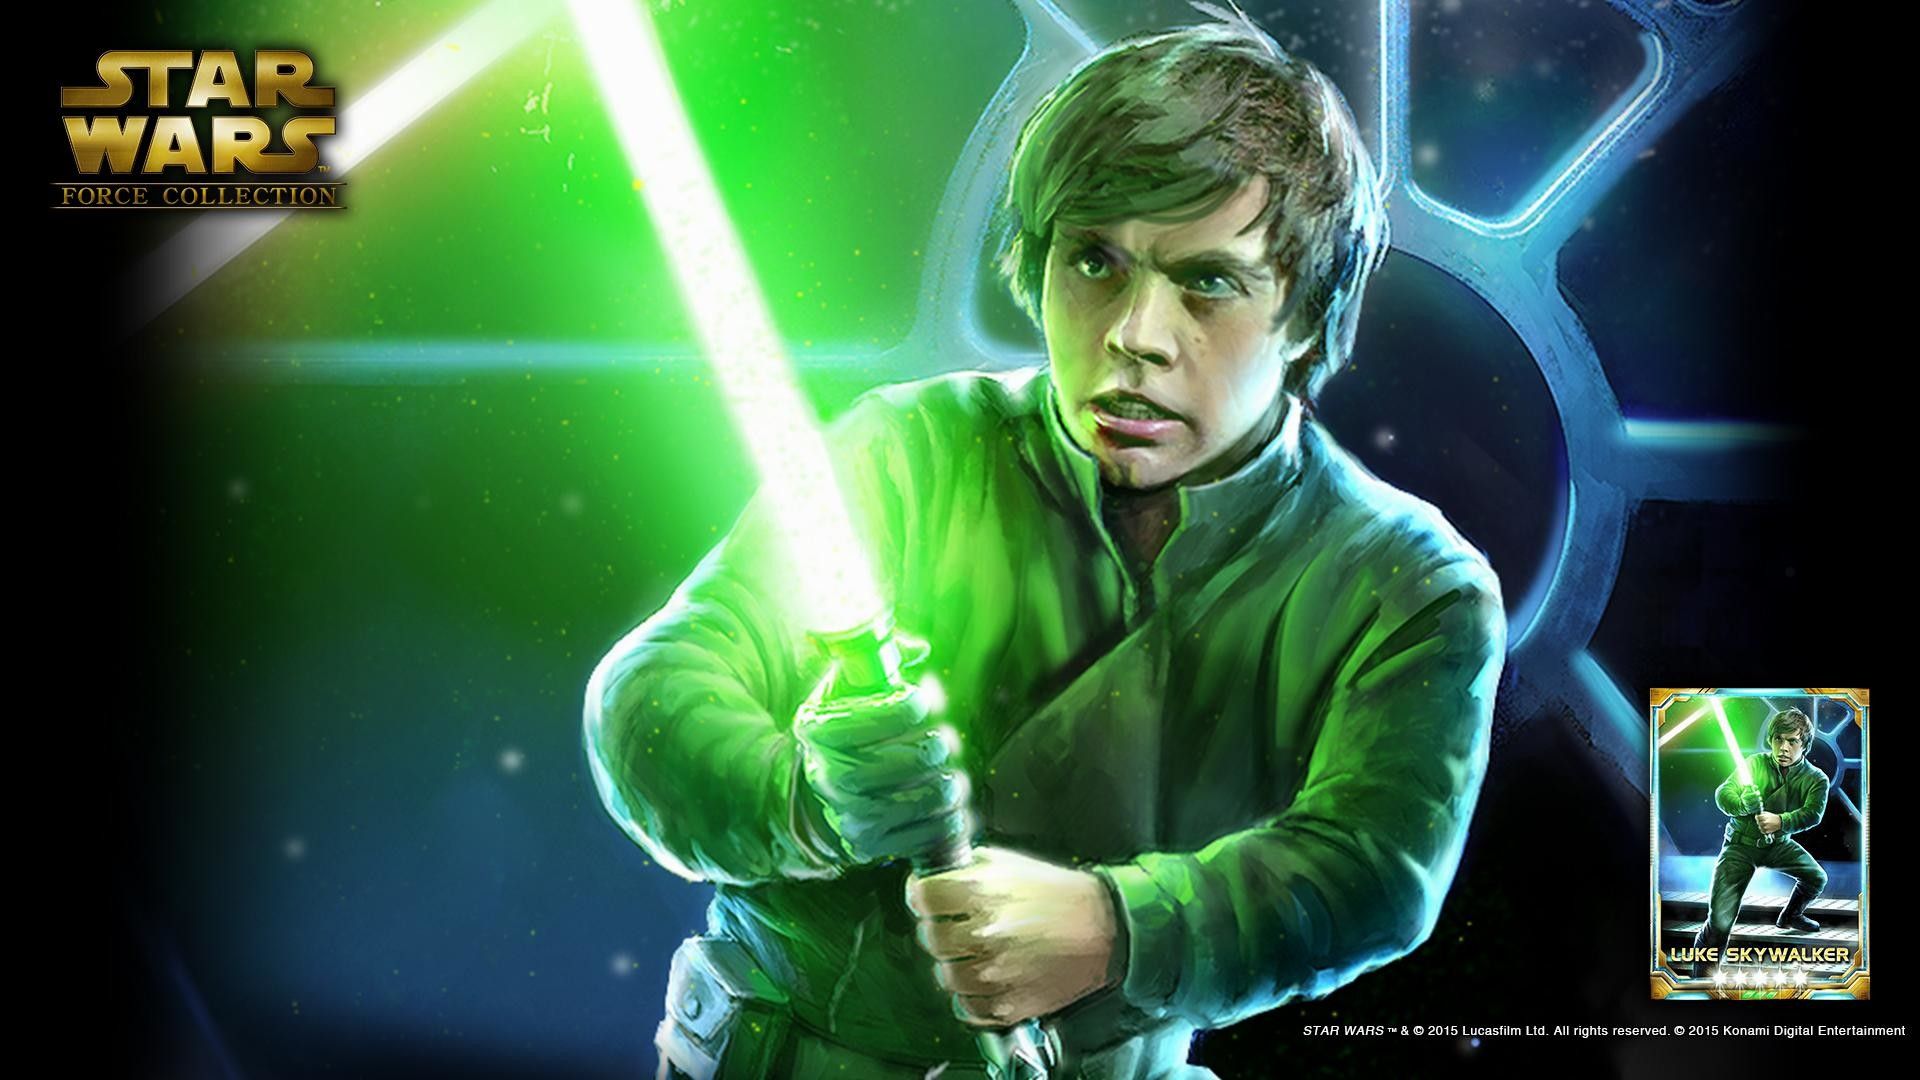 Luke Skywalker Wallpaper background picture